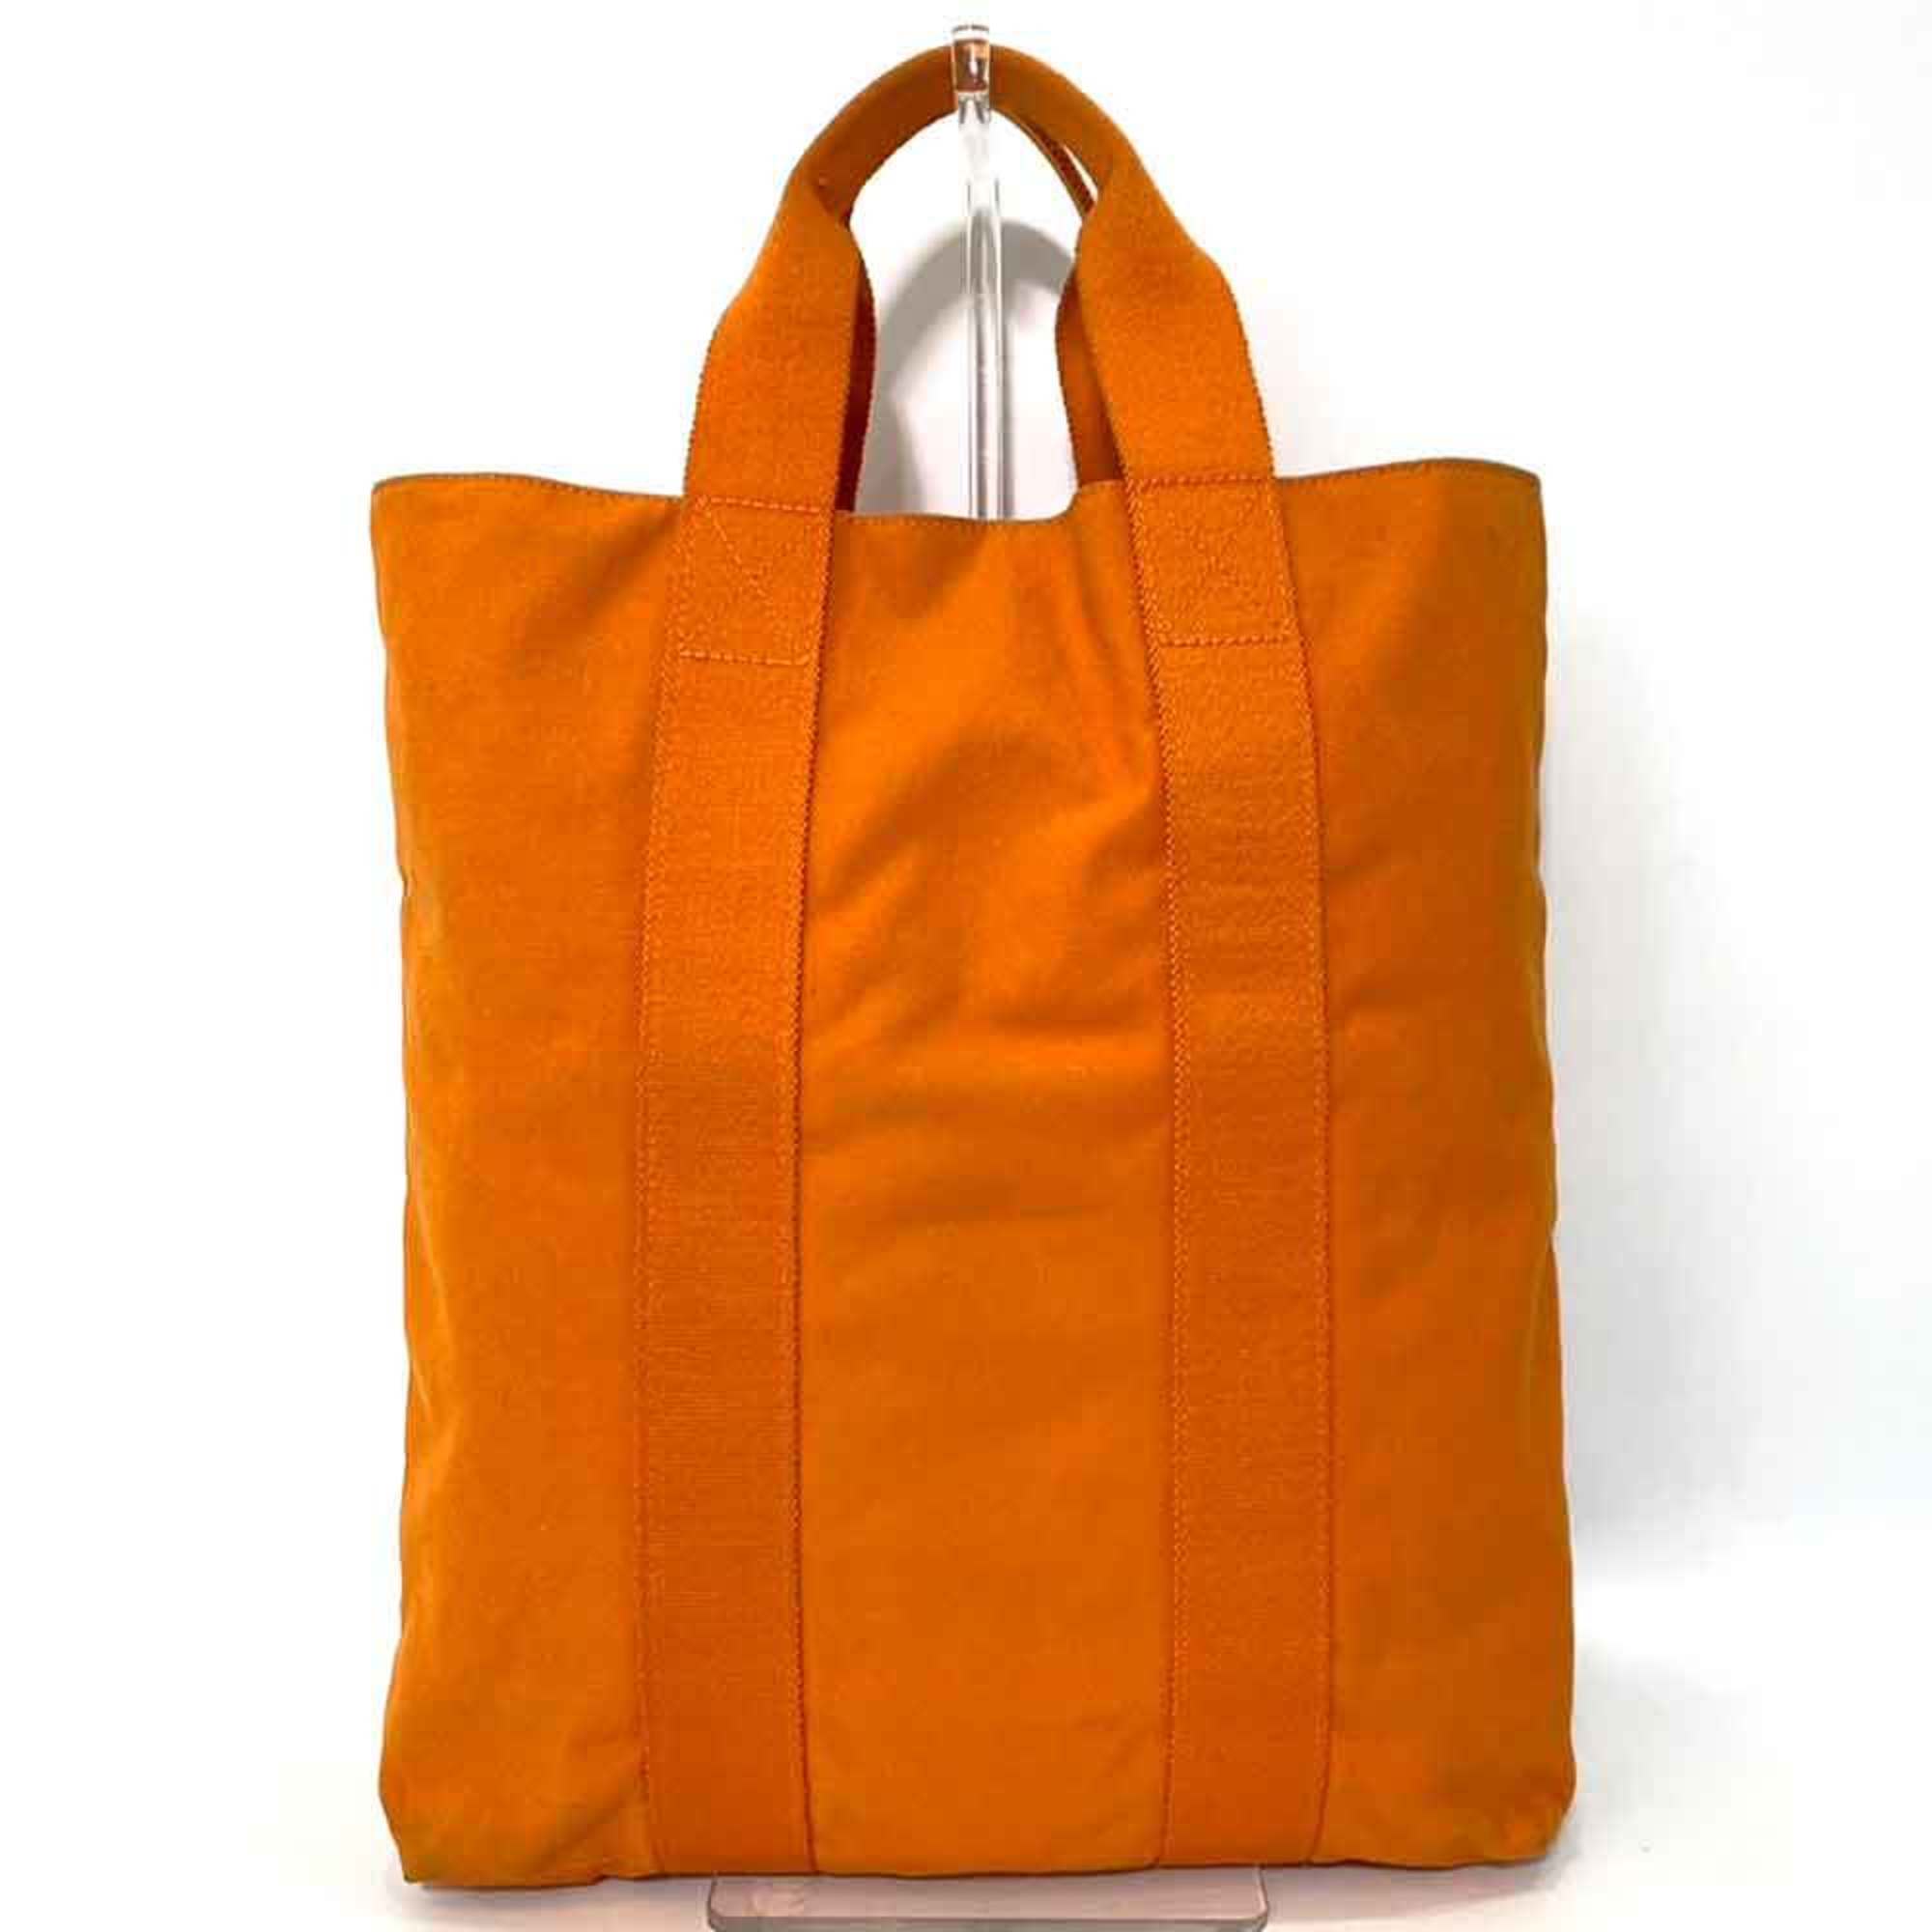 Hermes Bag French Festival Foule Tou Cabas Orange Tote Handbag Women Men Canvas HERMES